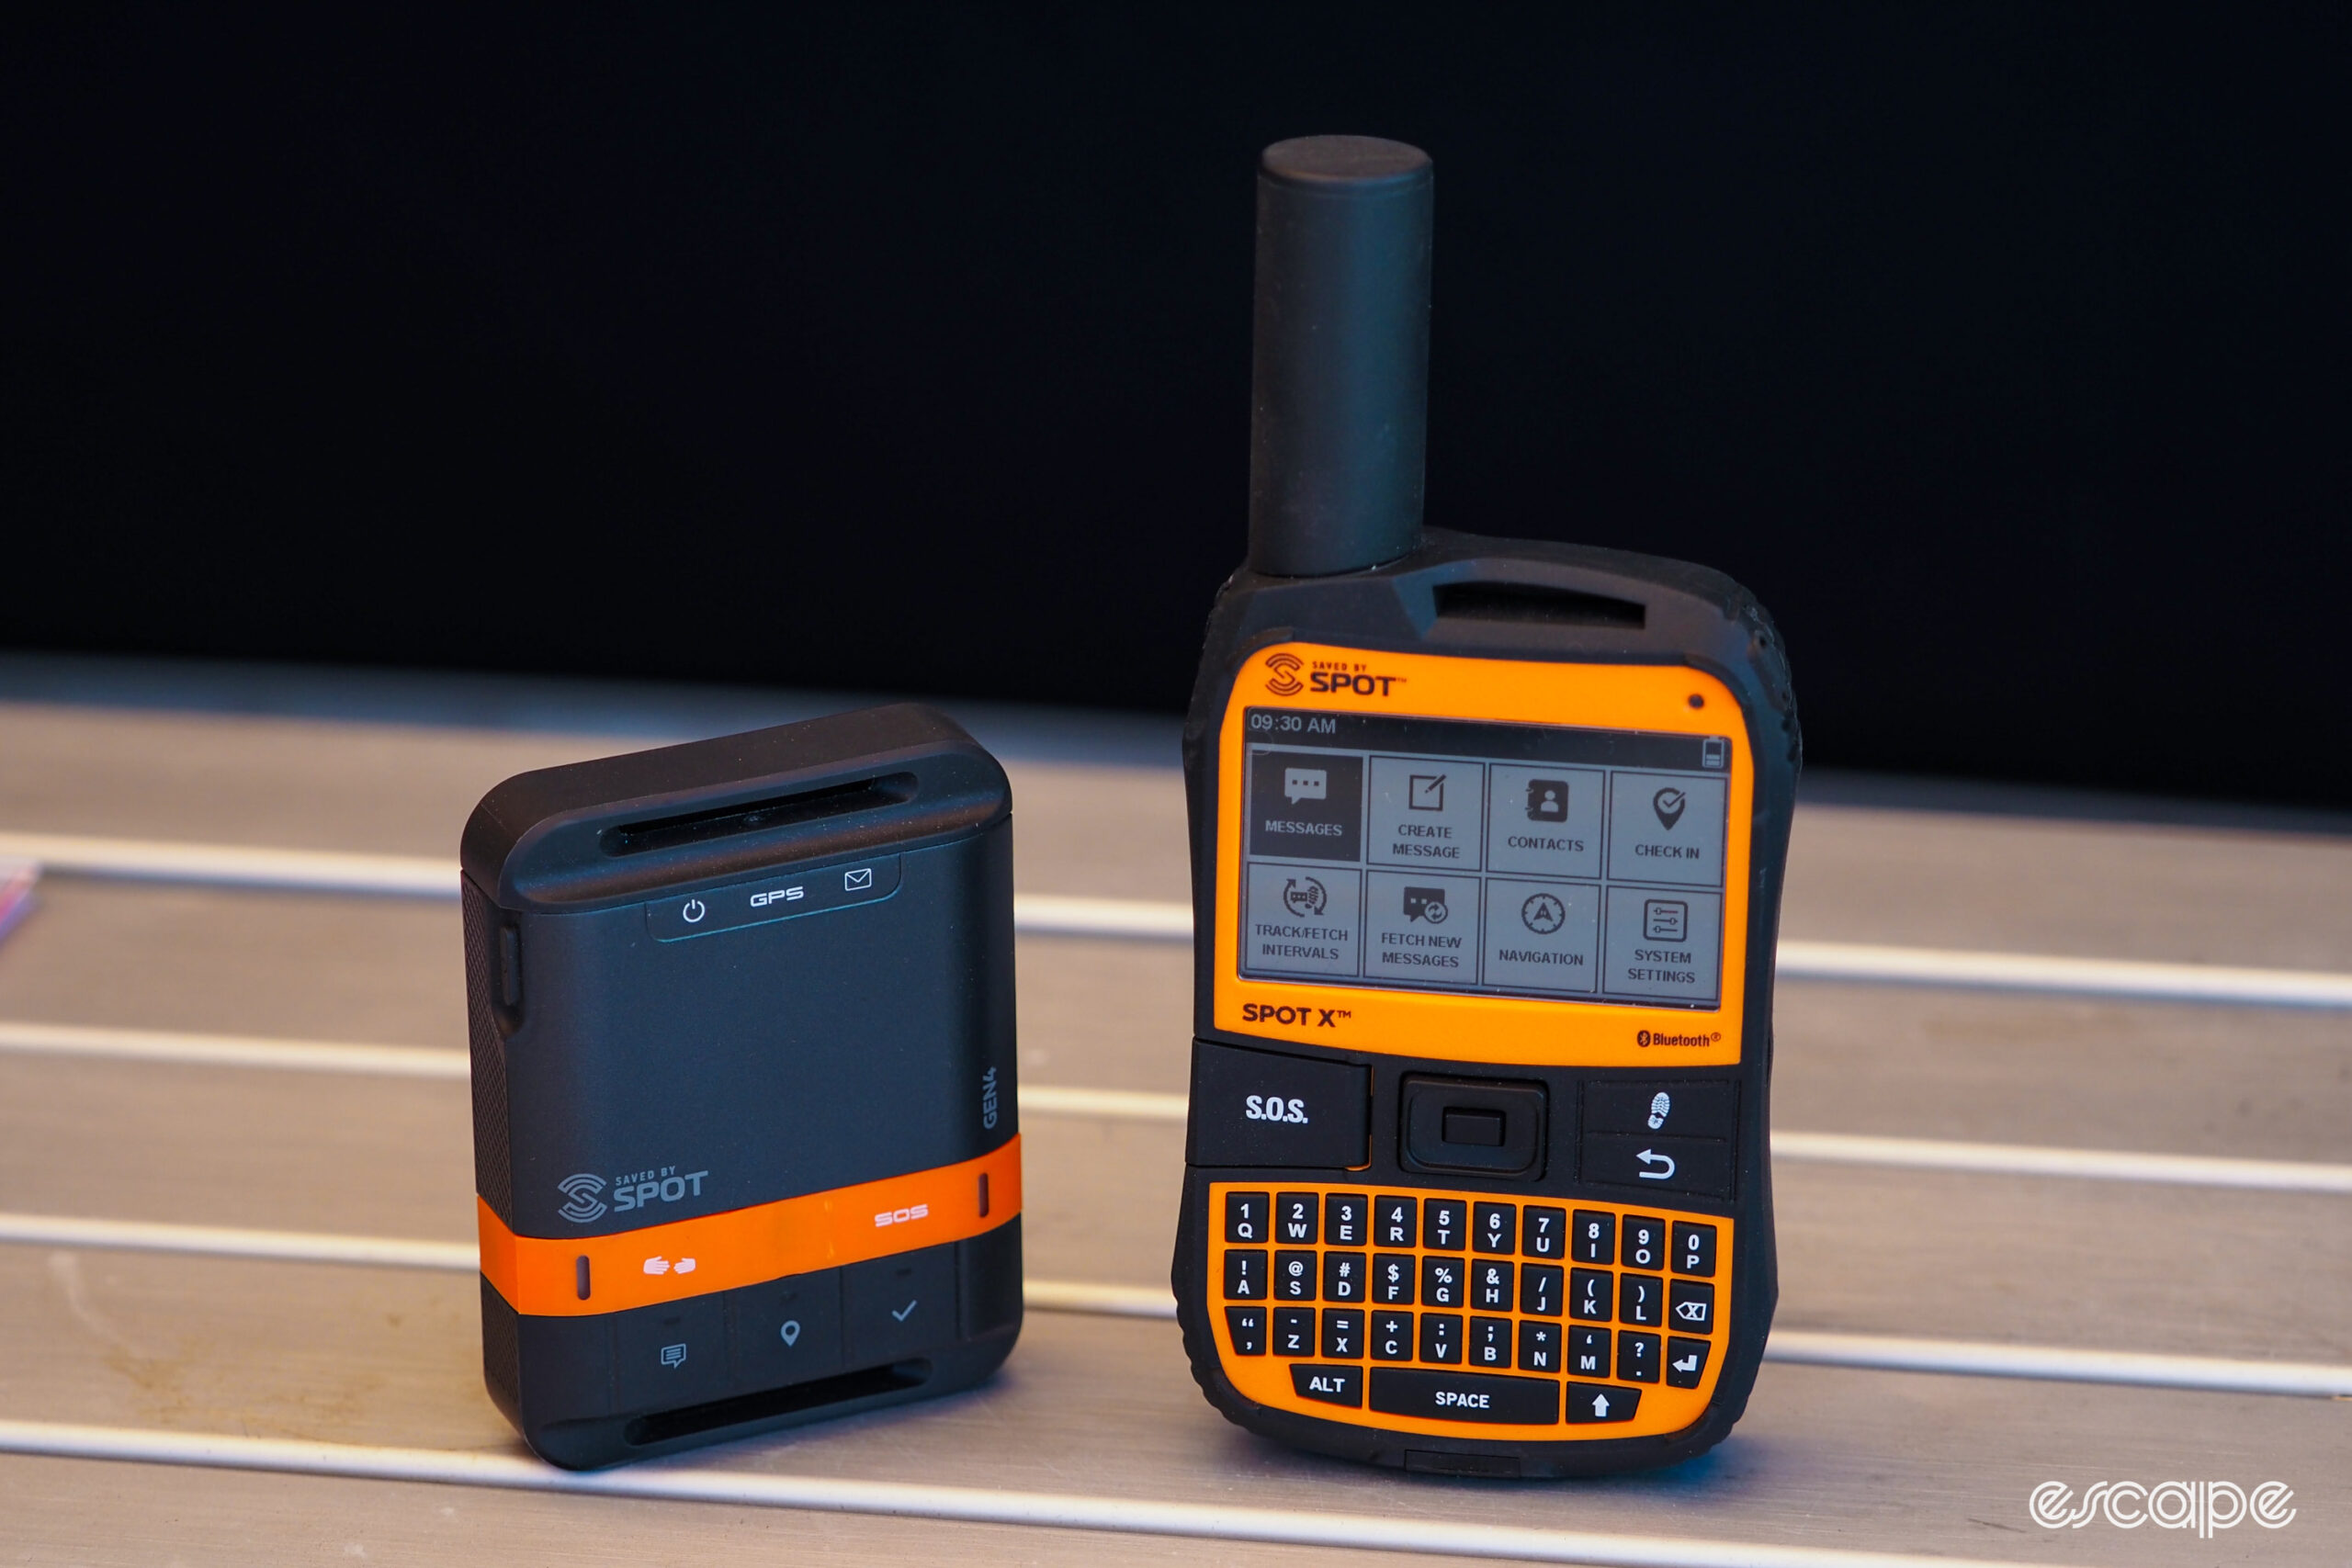 Spot Gen 4 and Spot X satellite communicators